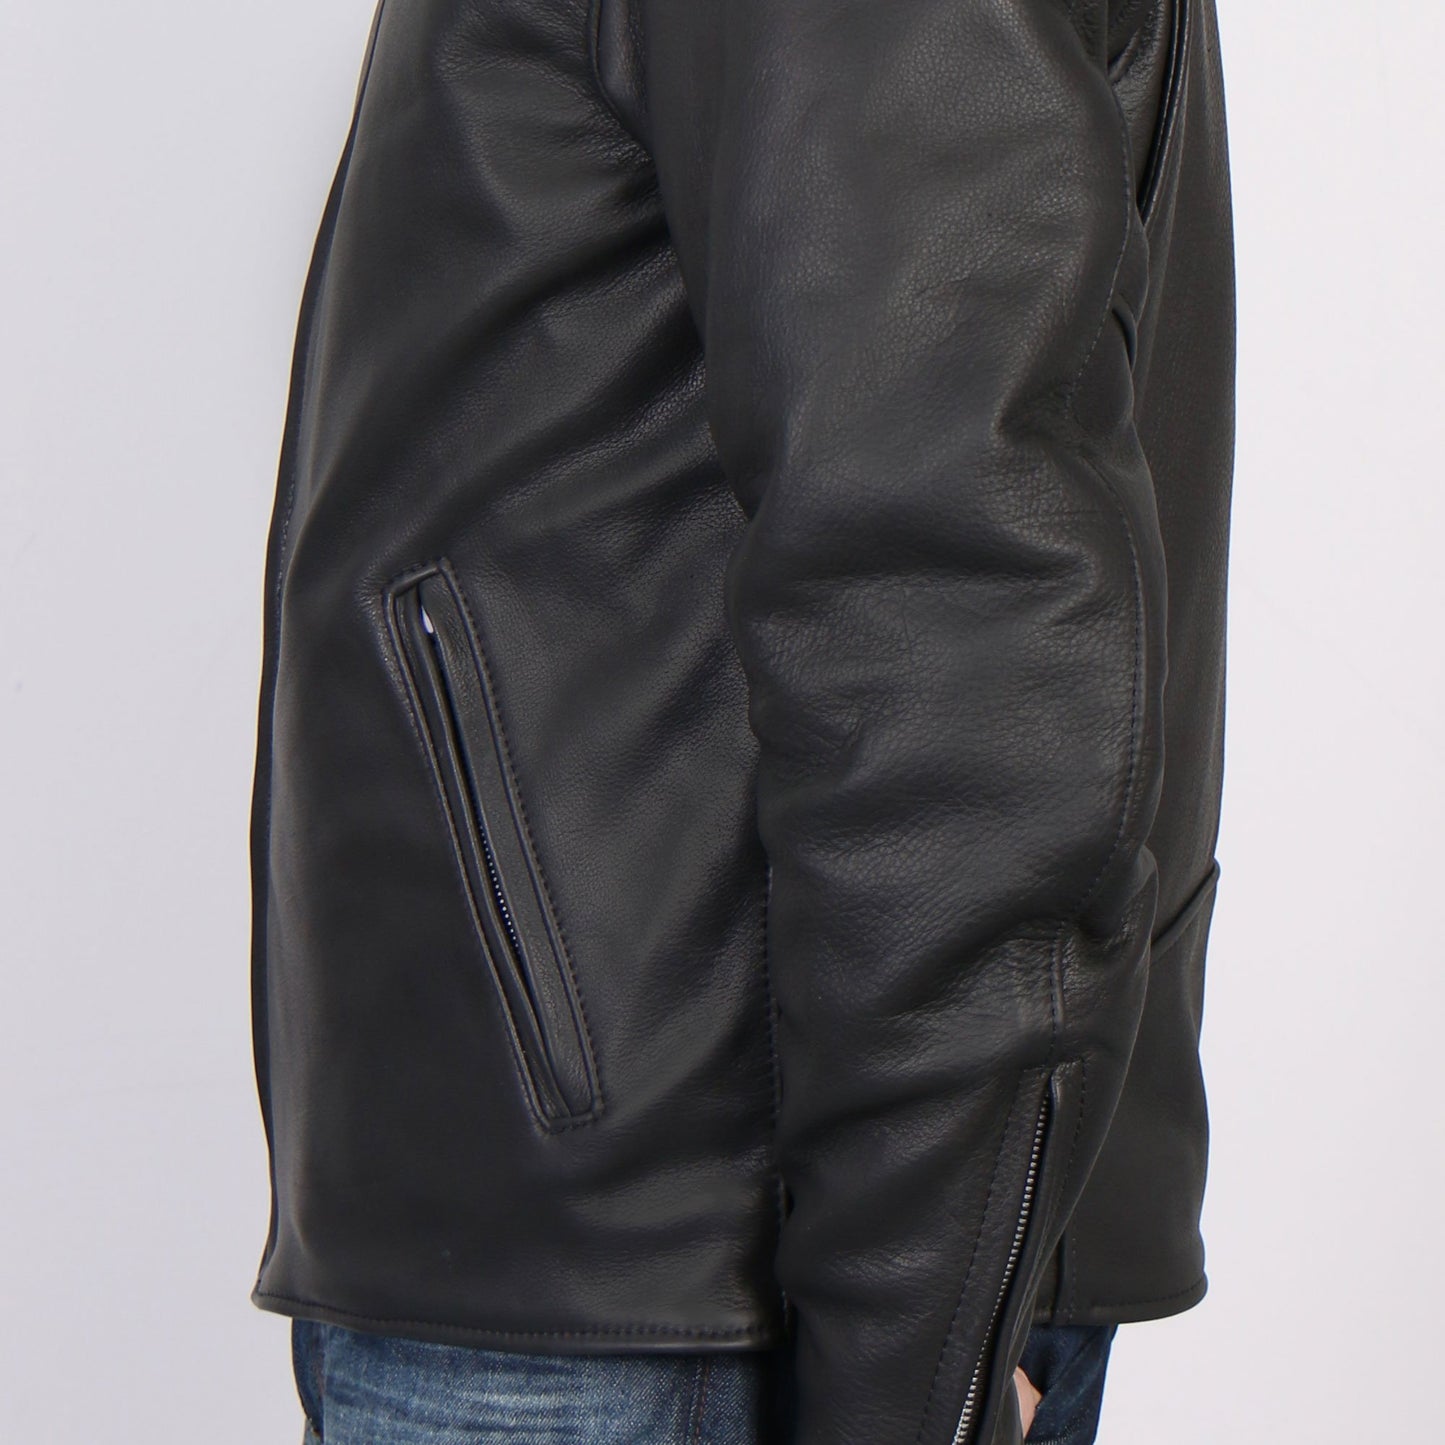 Hot Leathers JKM5006 USA Made Men's Black Leather Motorcycle Jacket